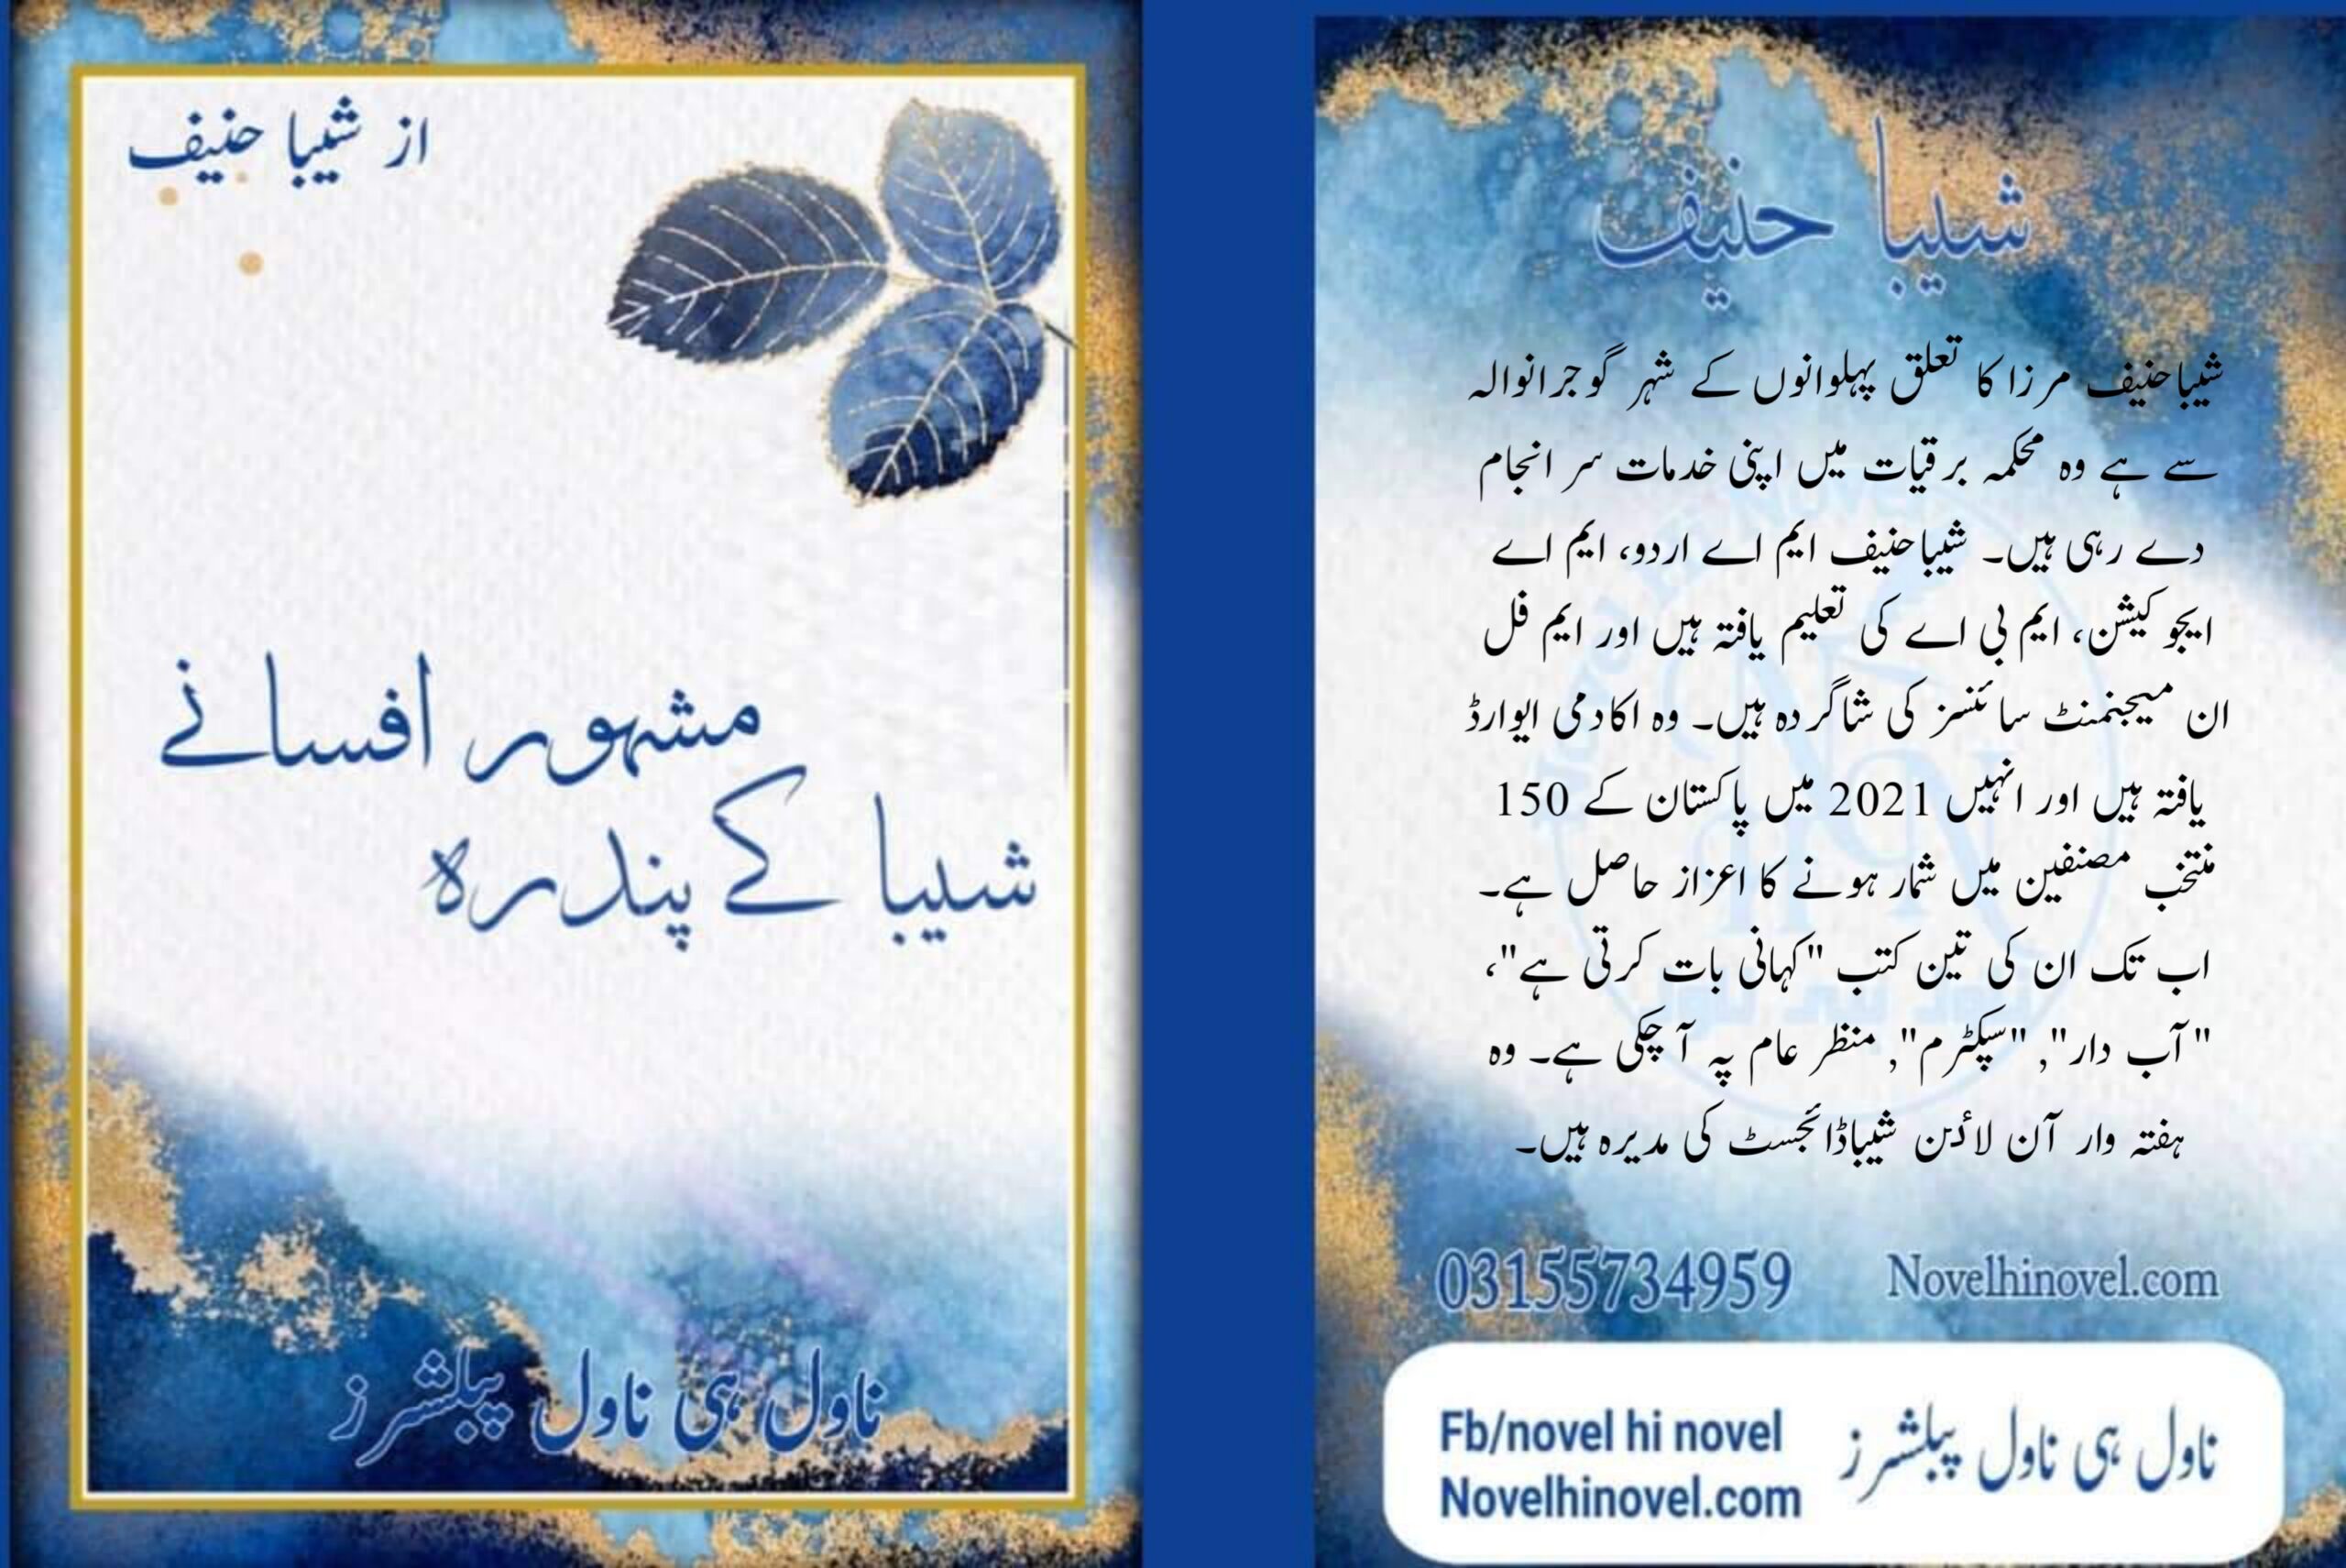 Sheeba K 15 Mashor Afsany Published By Novel Hi Novel Ist Edition (NHN-22-110)